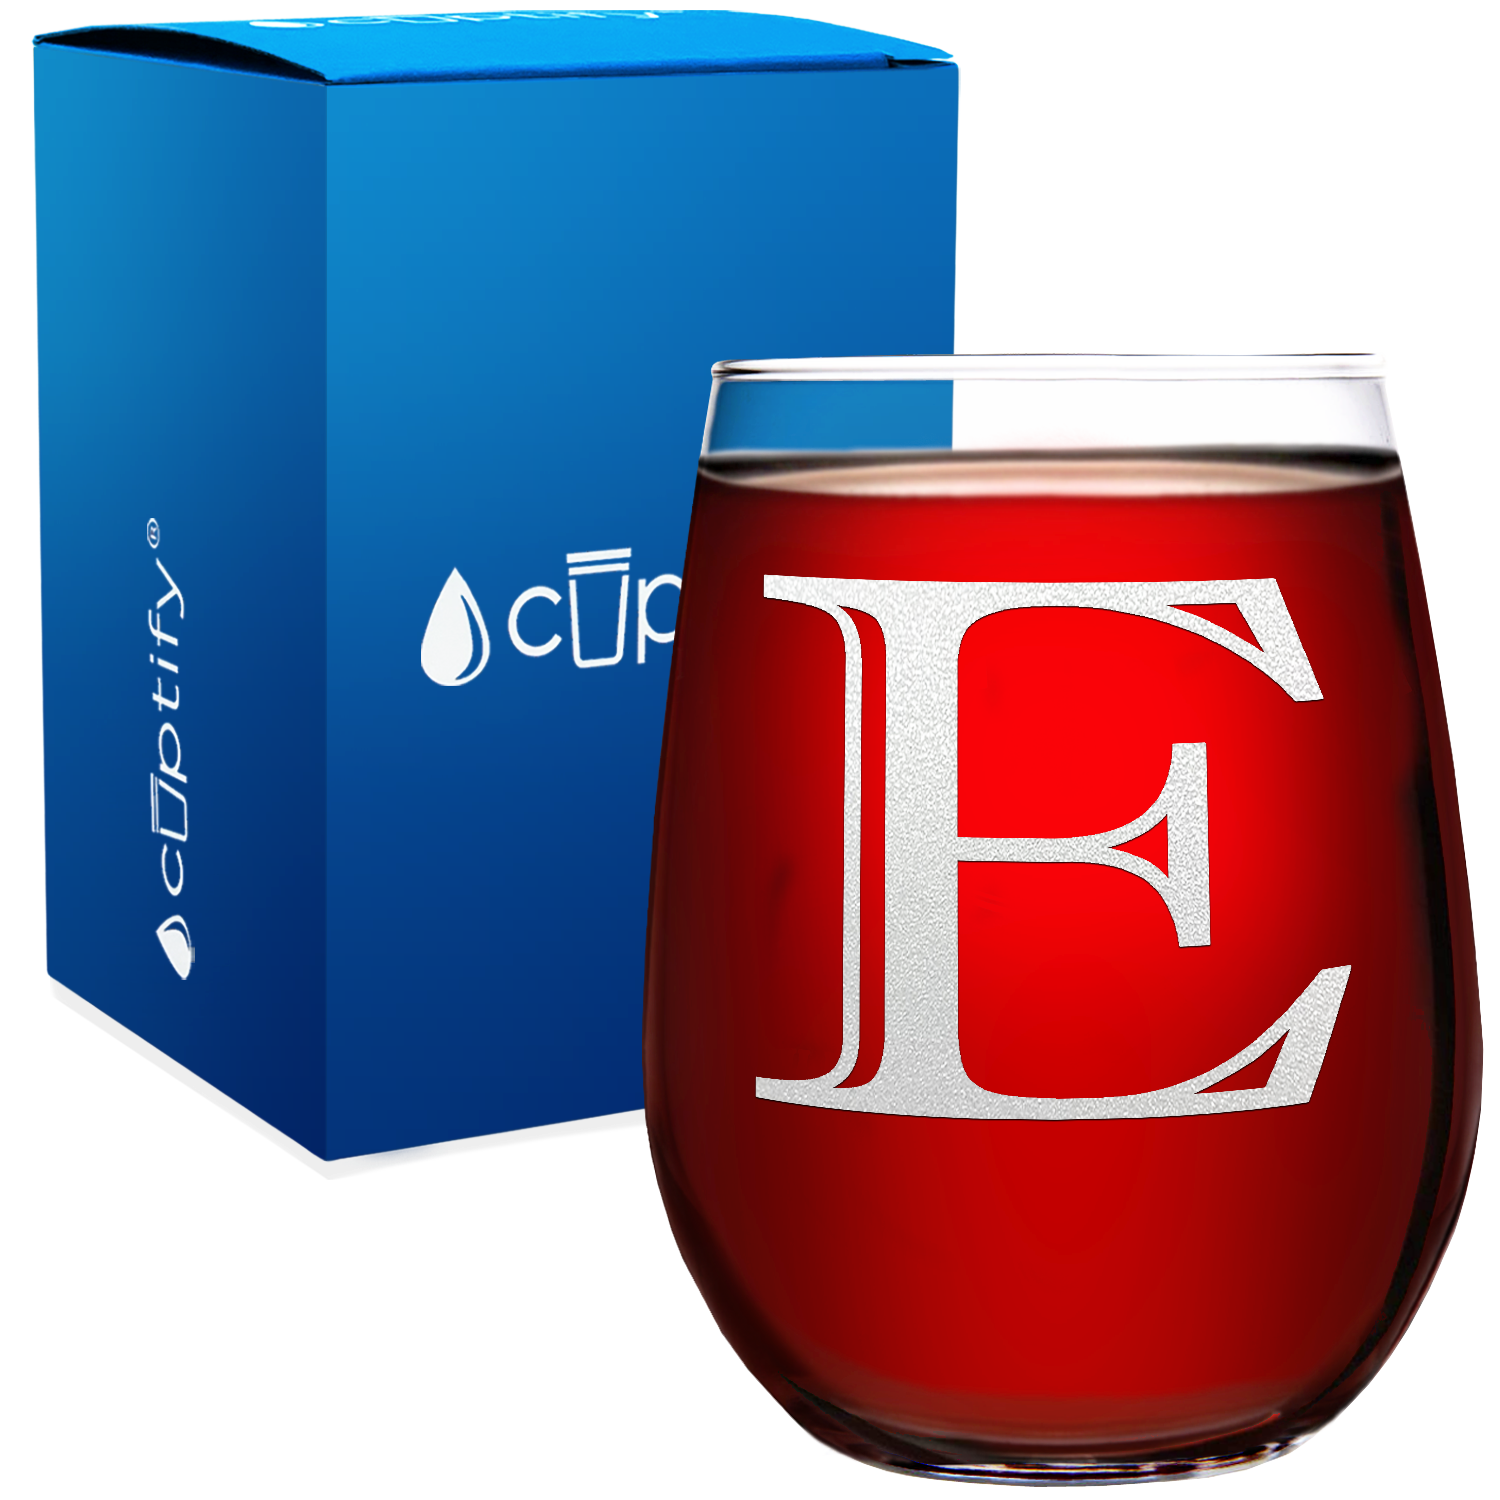 Monogram Initial Letter E 17oz Stemless Wine Glass